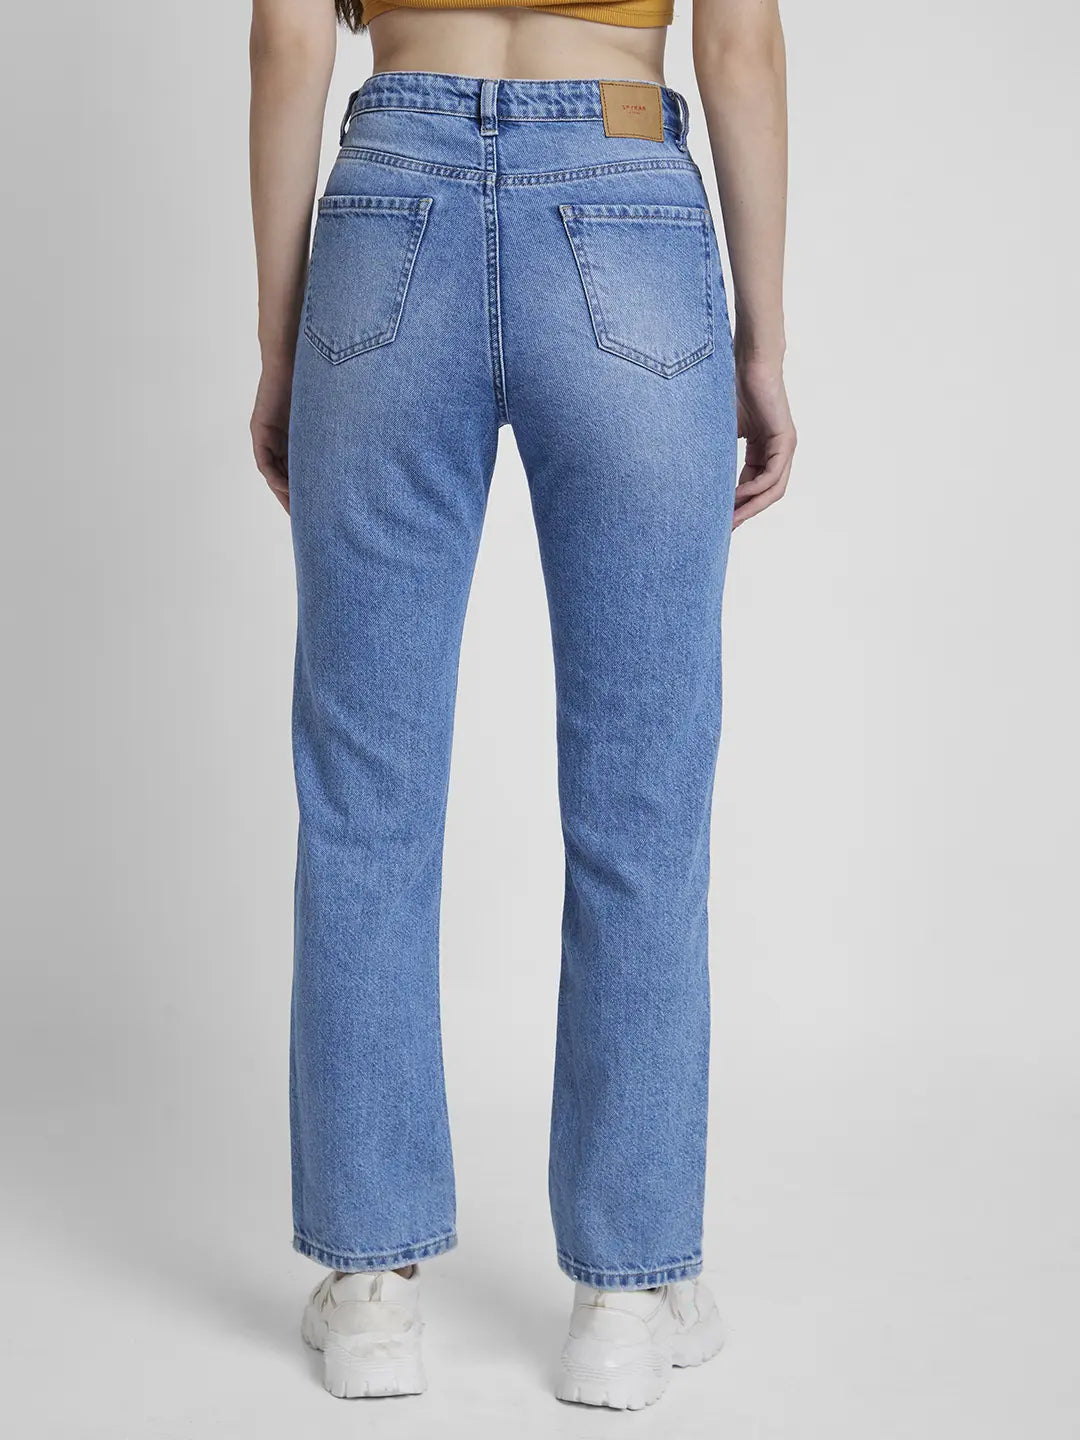 Spykar Women Light Blue Cotton Straight Fit Regular Length Mild Distressed Jeans -(Bella)